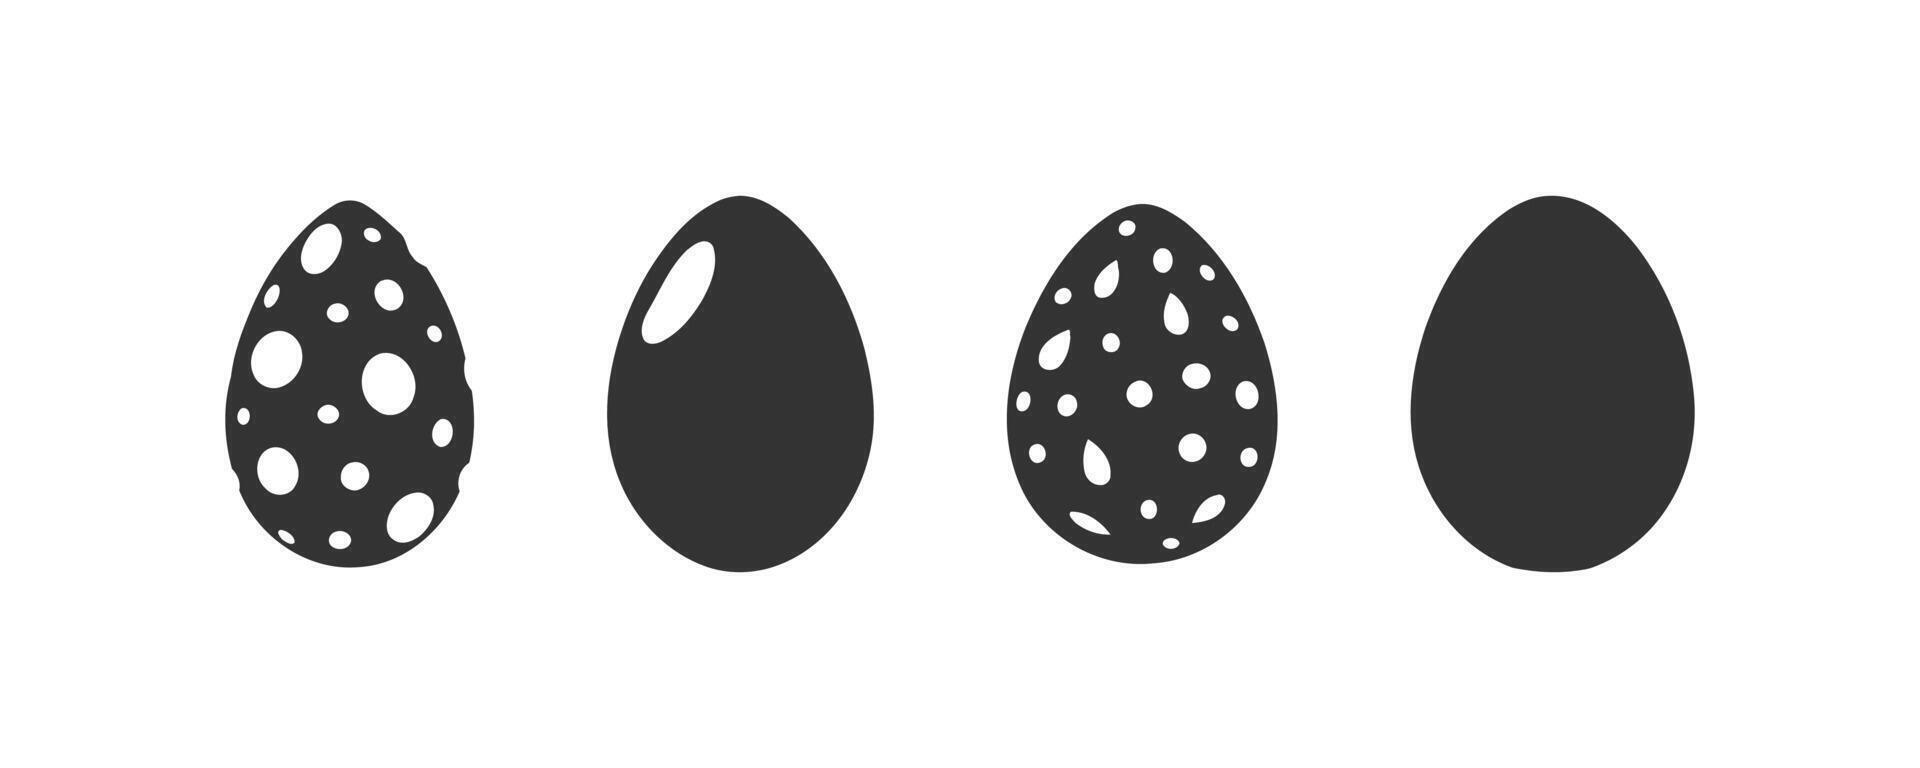 Ostern Eier Sammlung. Vektor Illustration Design.